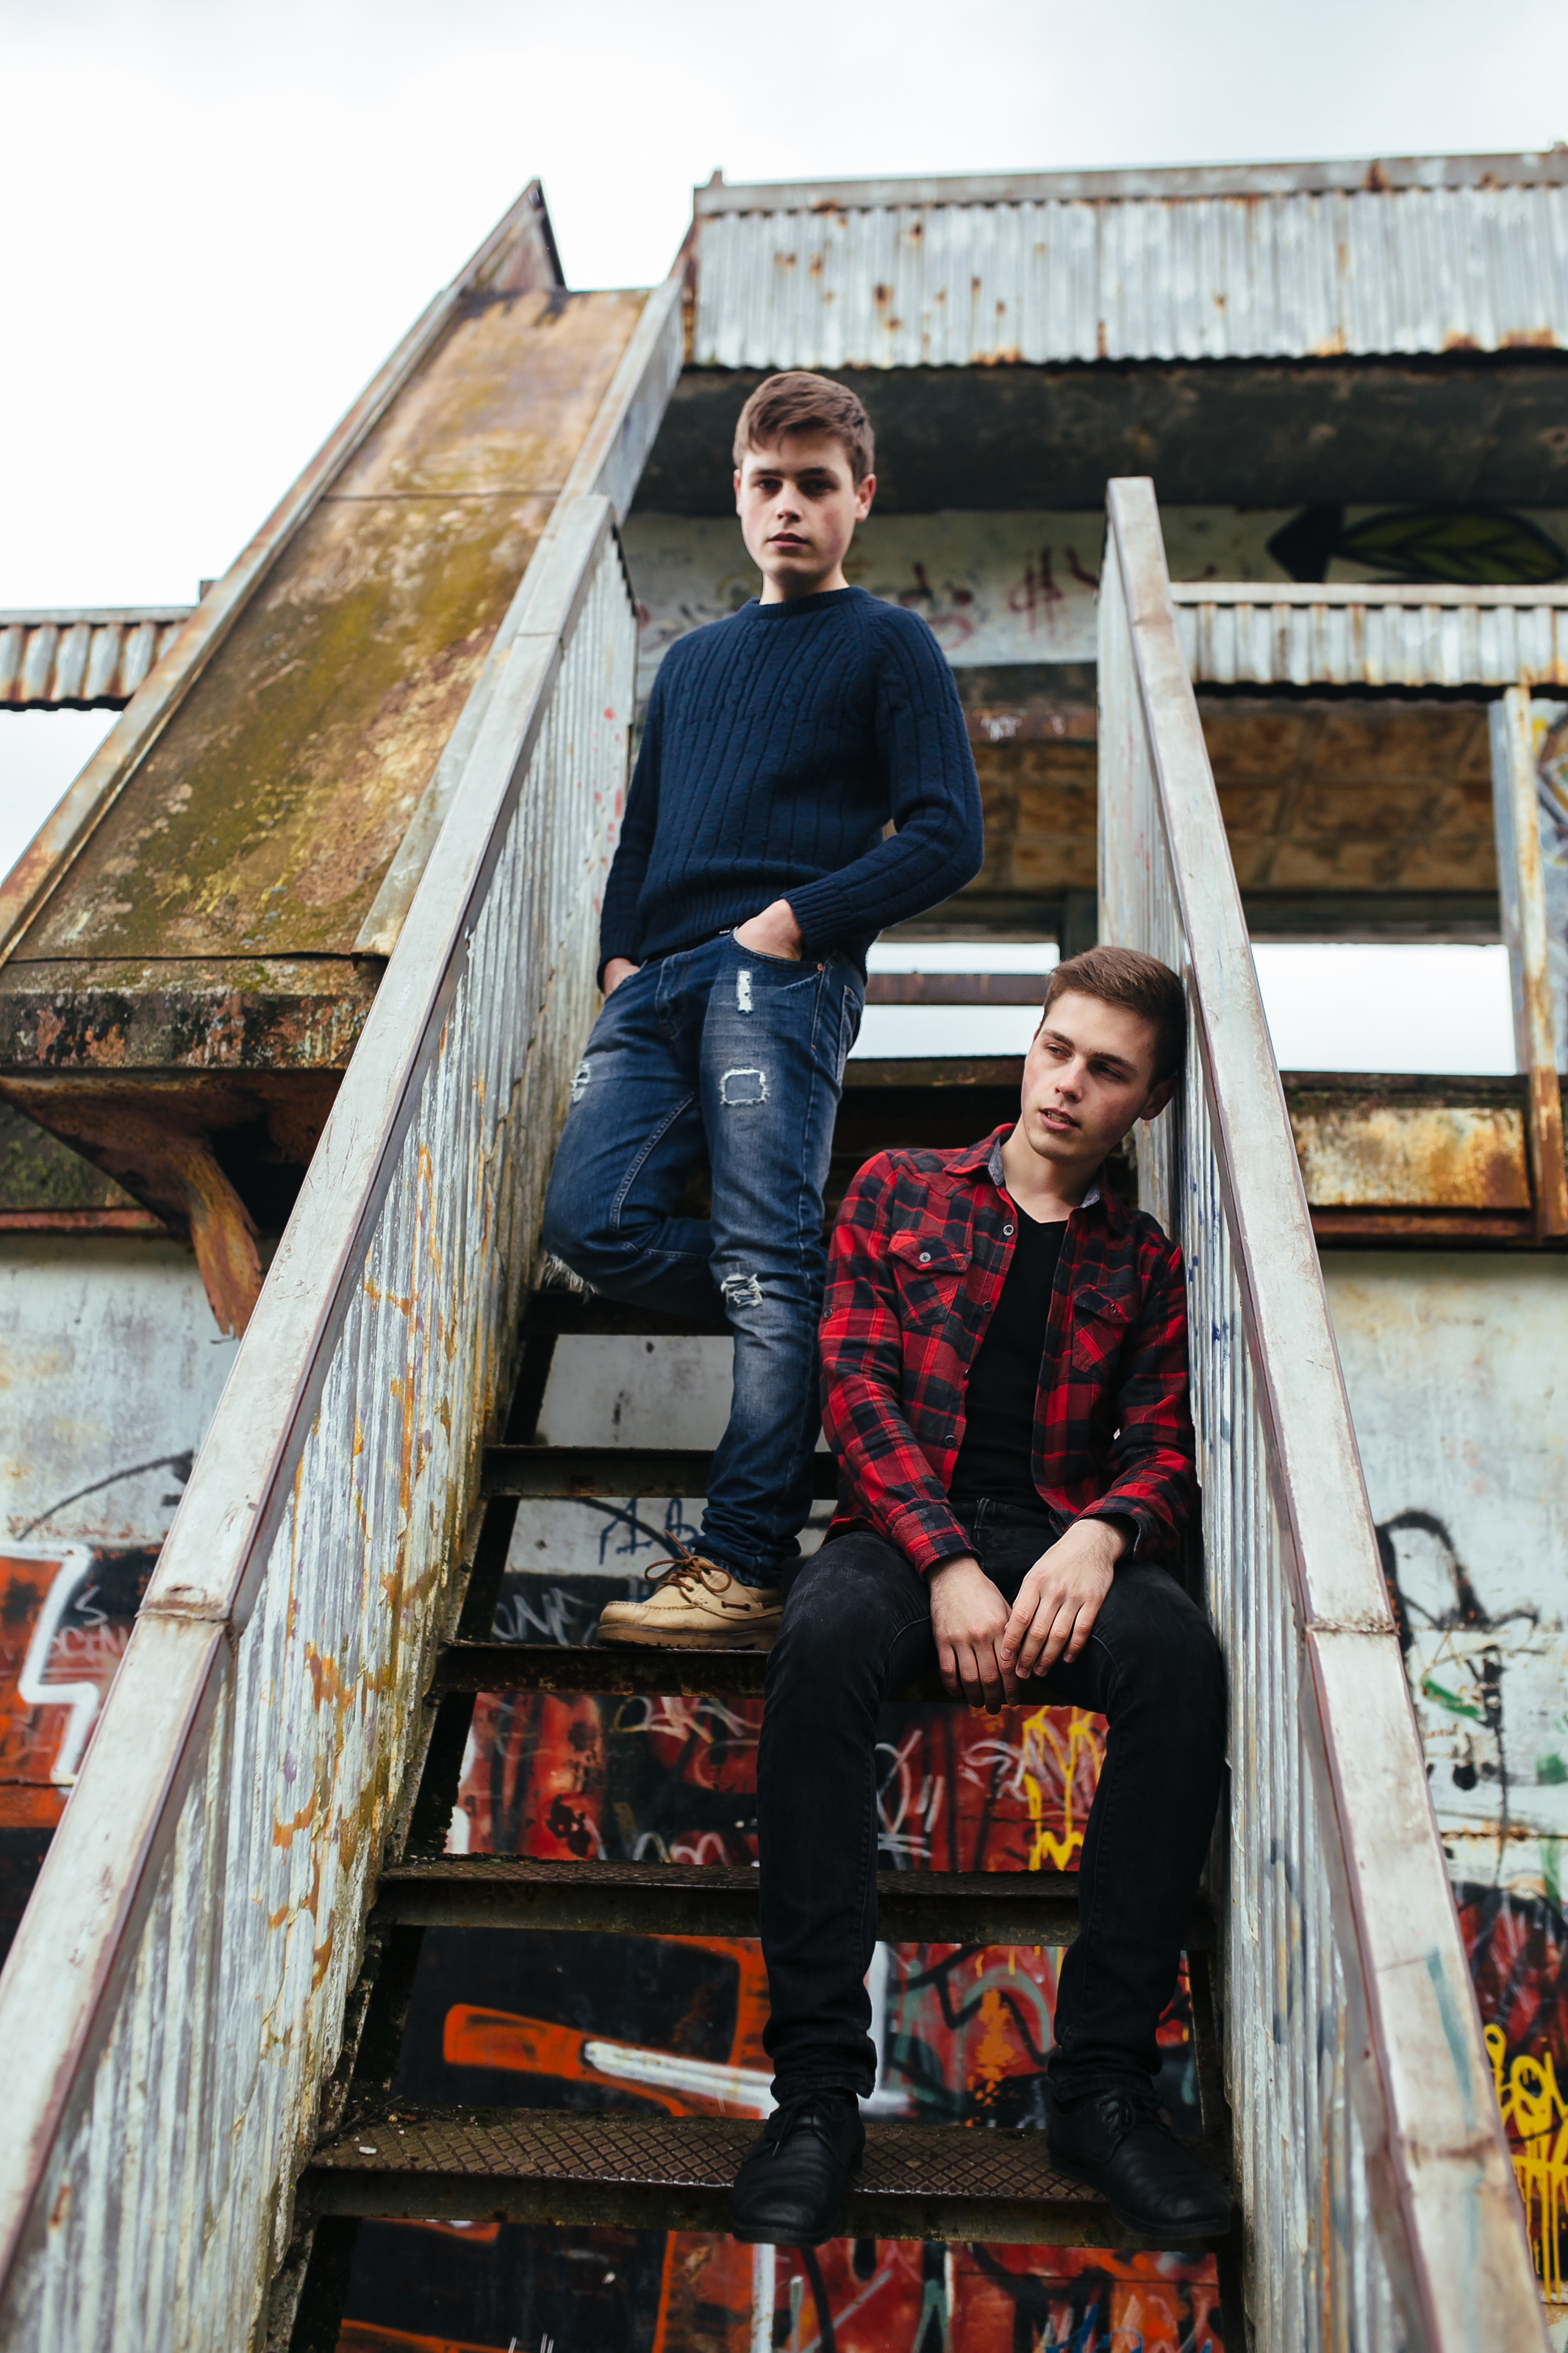 Two guys posing on the stairs | Source: Freepik